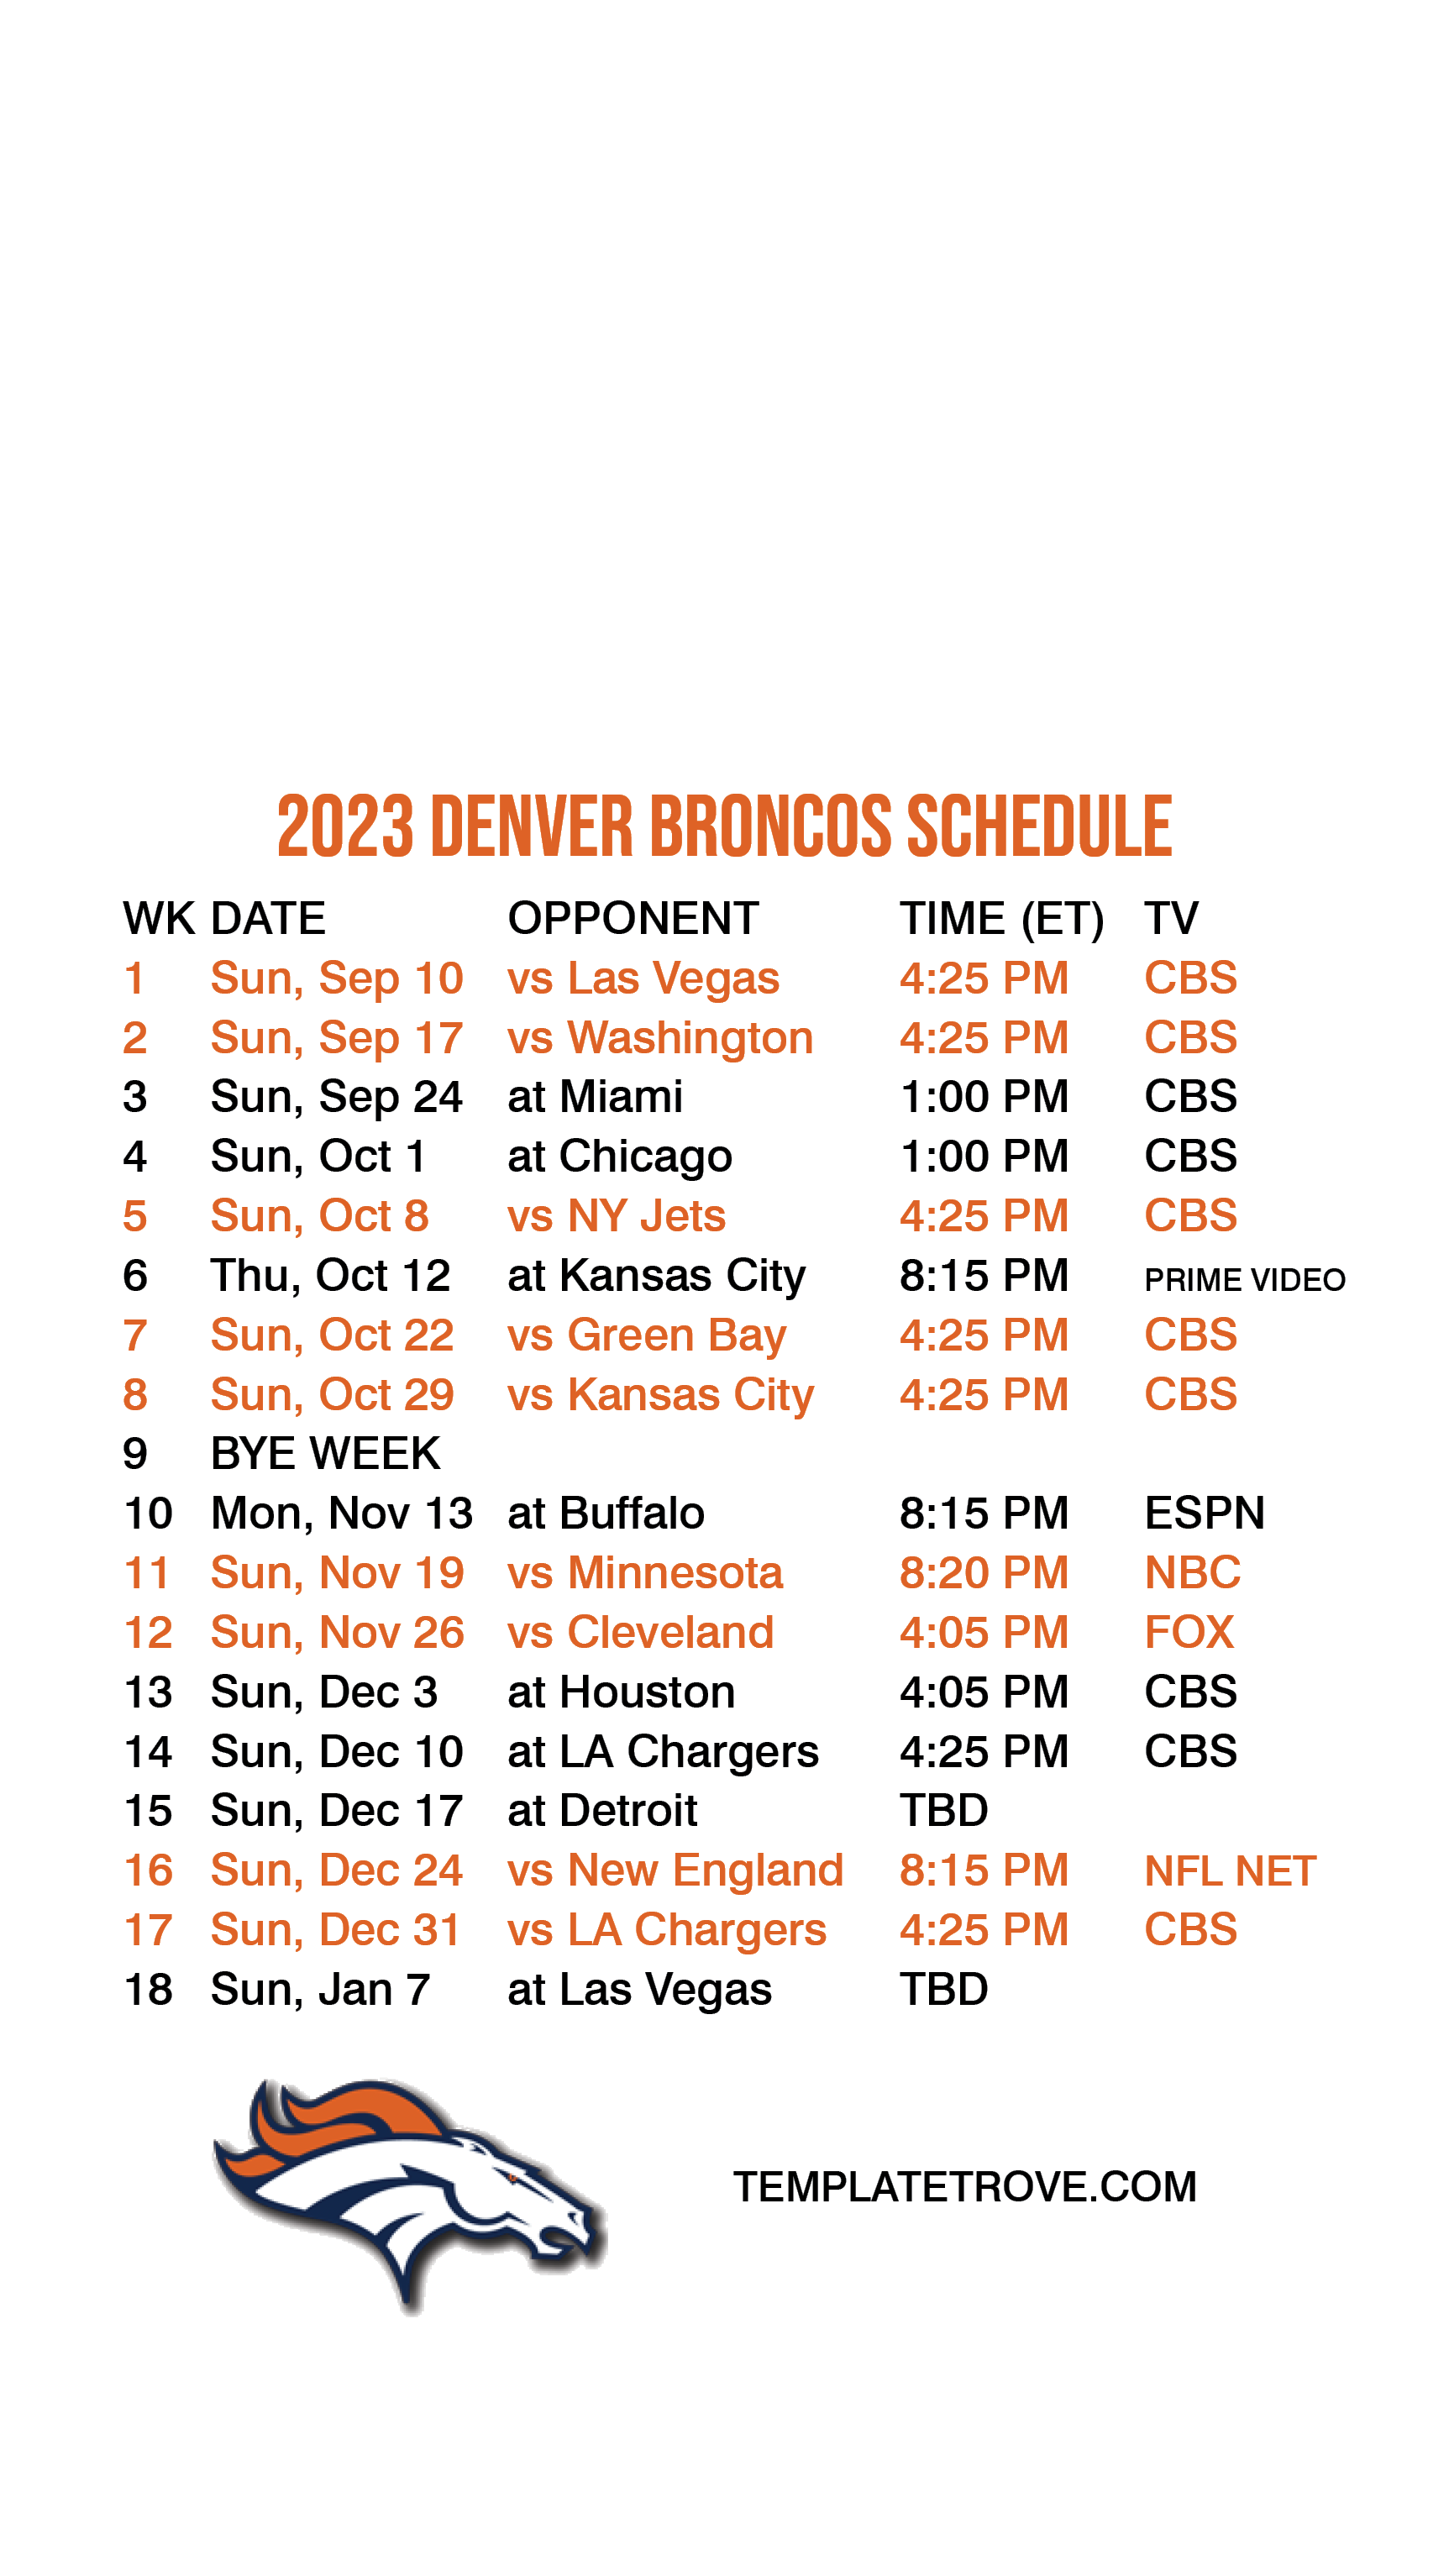 Denver Broncos Schedule for the 2023 Season